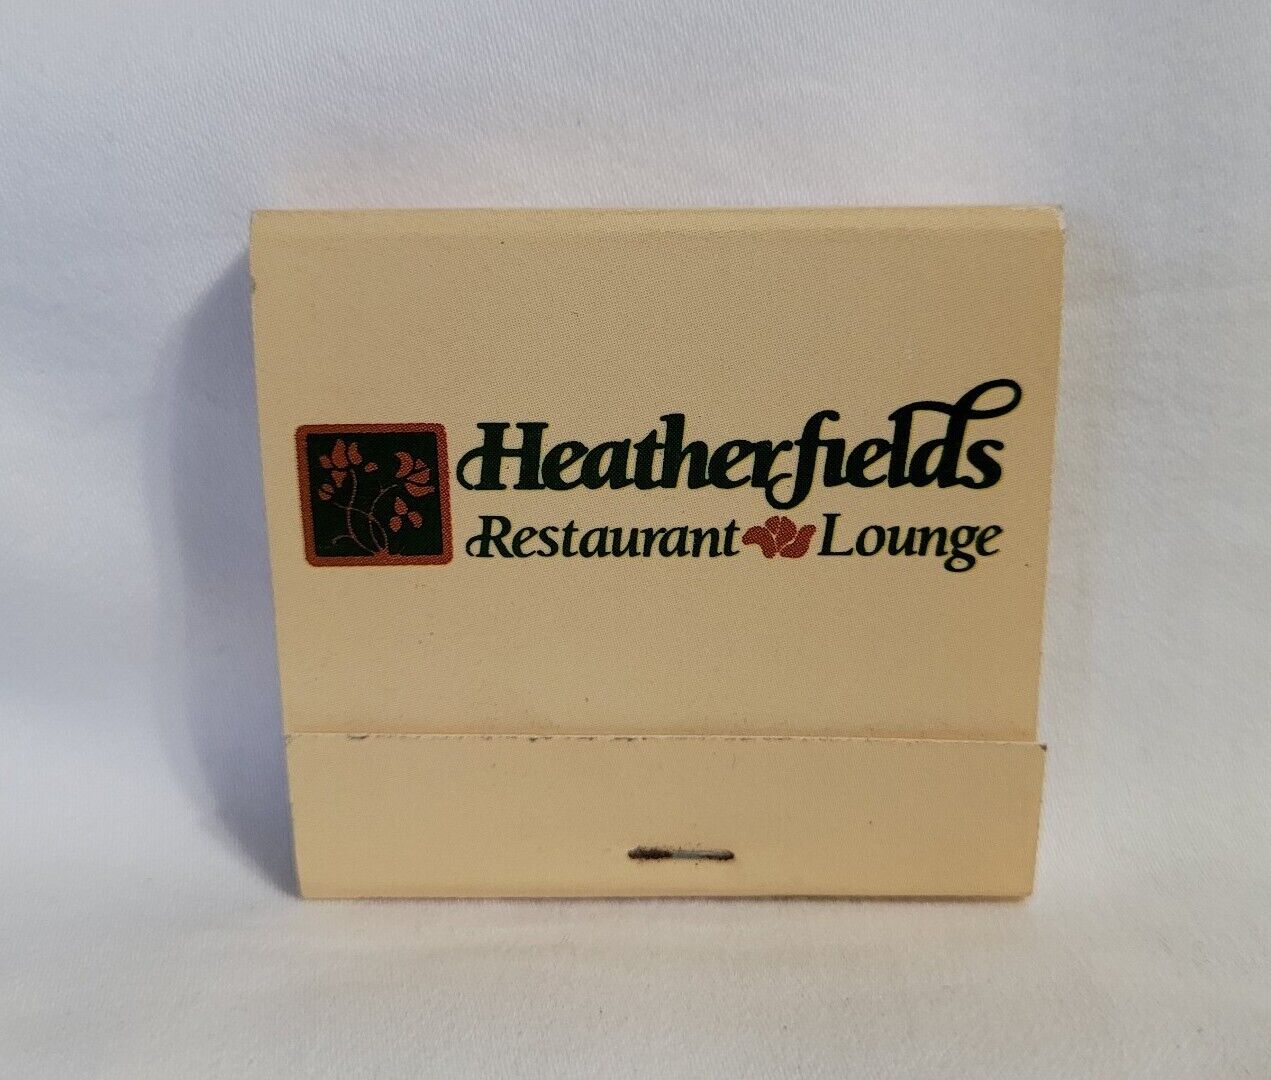 Vintage Heatherfields Restaurant Lounge Matchbook Martinsburg WV Advertising